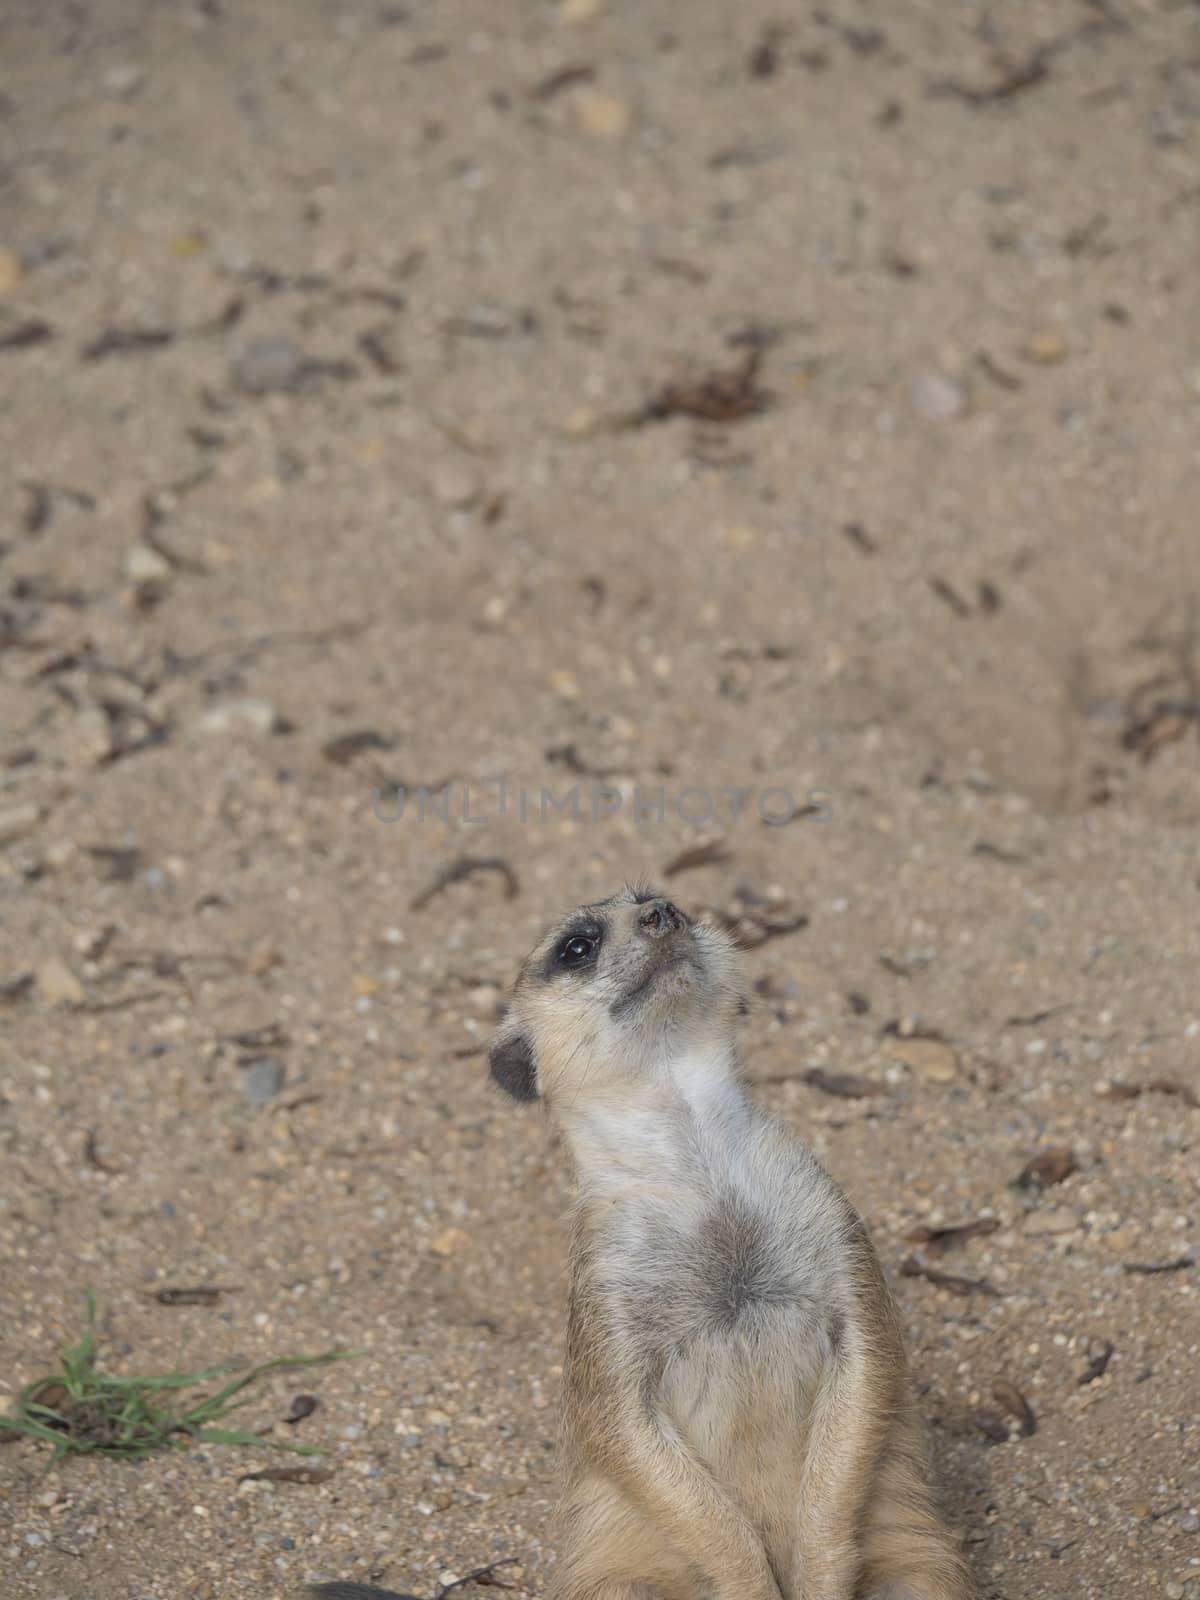 Close up standing meerkat or suricate, Suricata suricatta looking up, selective focus, copy space for text.